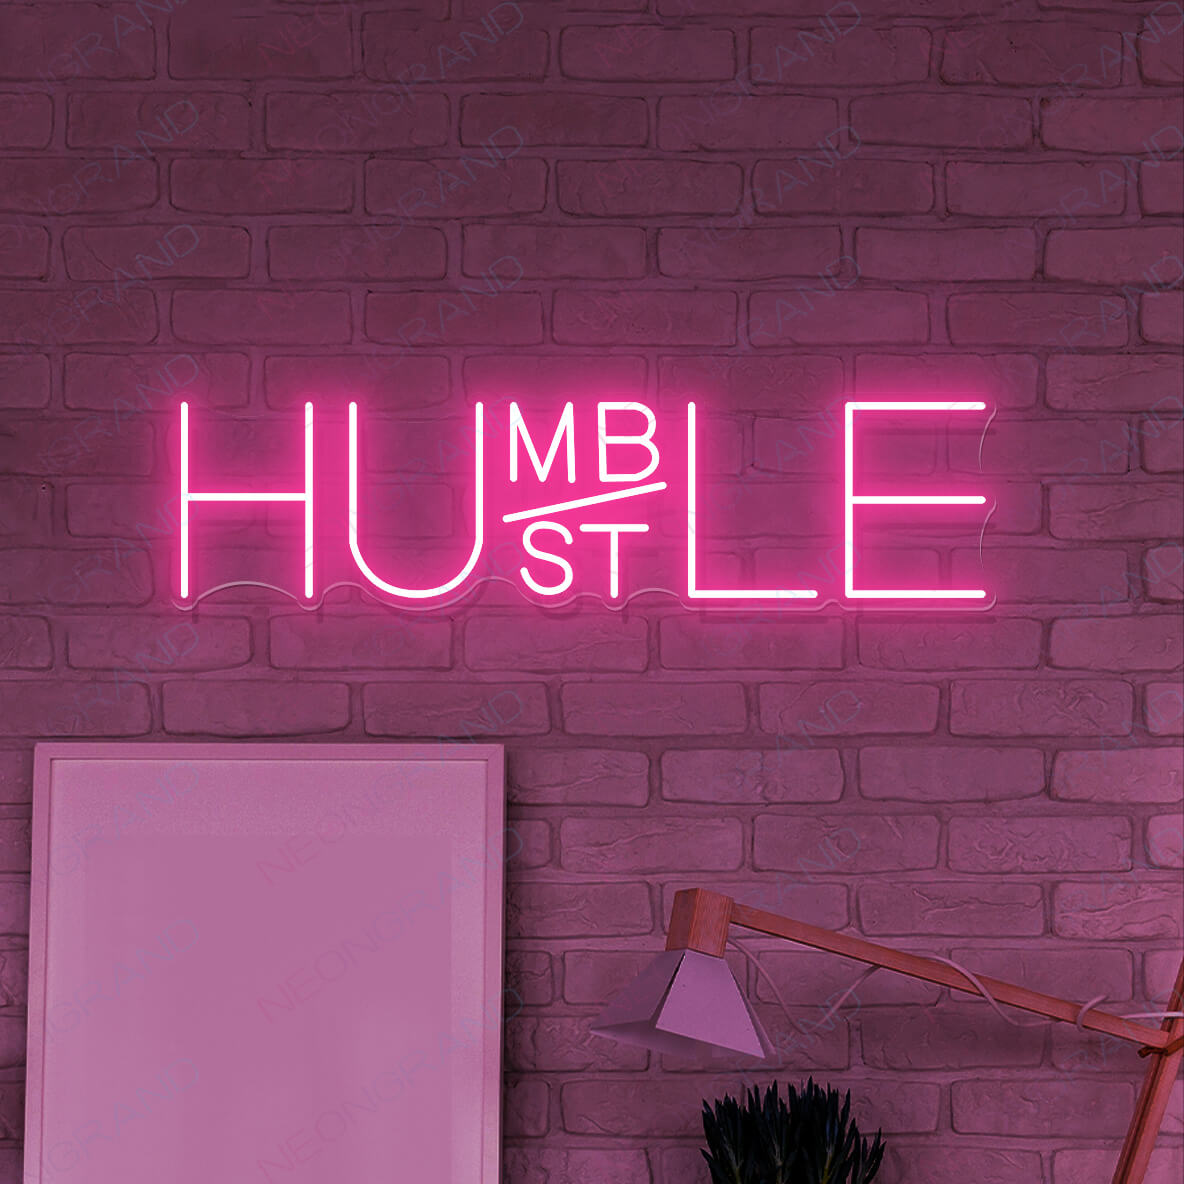 Hustle Neon Sign Humble Hustle Led Light pink